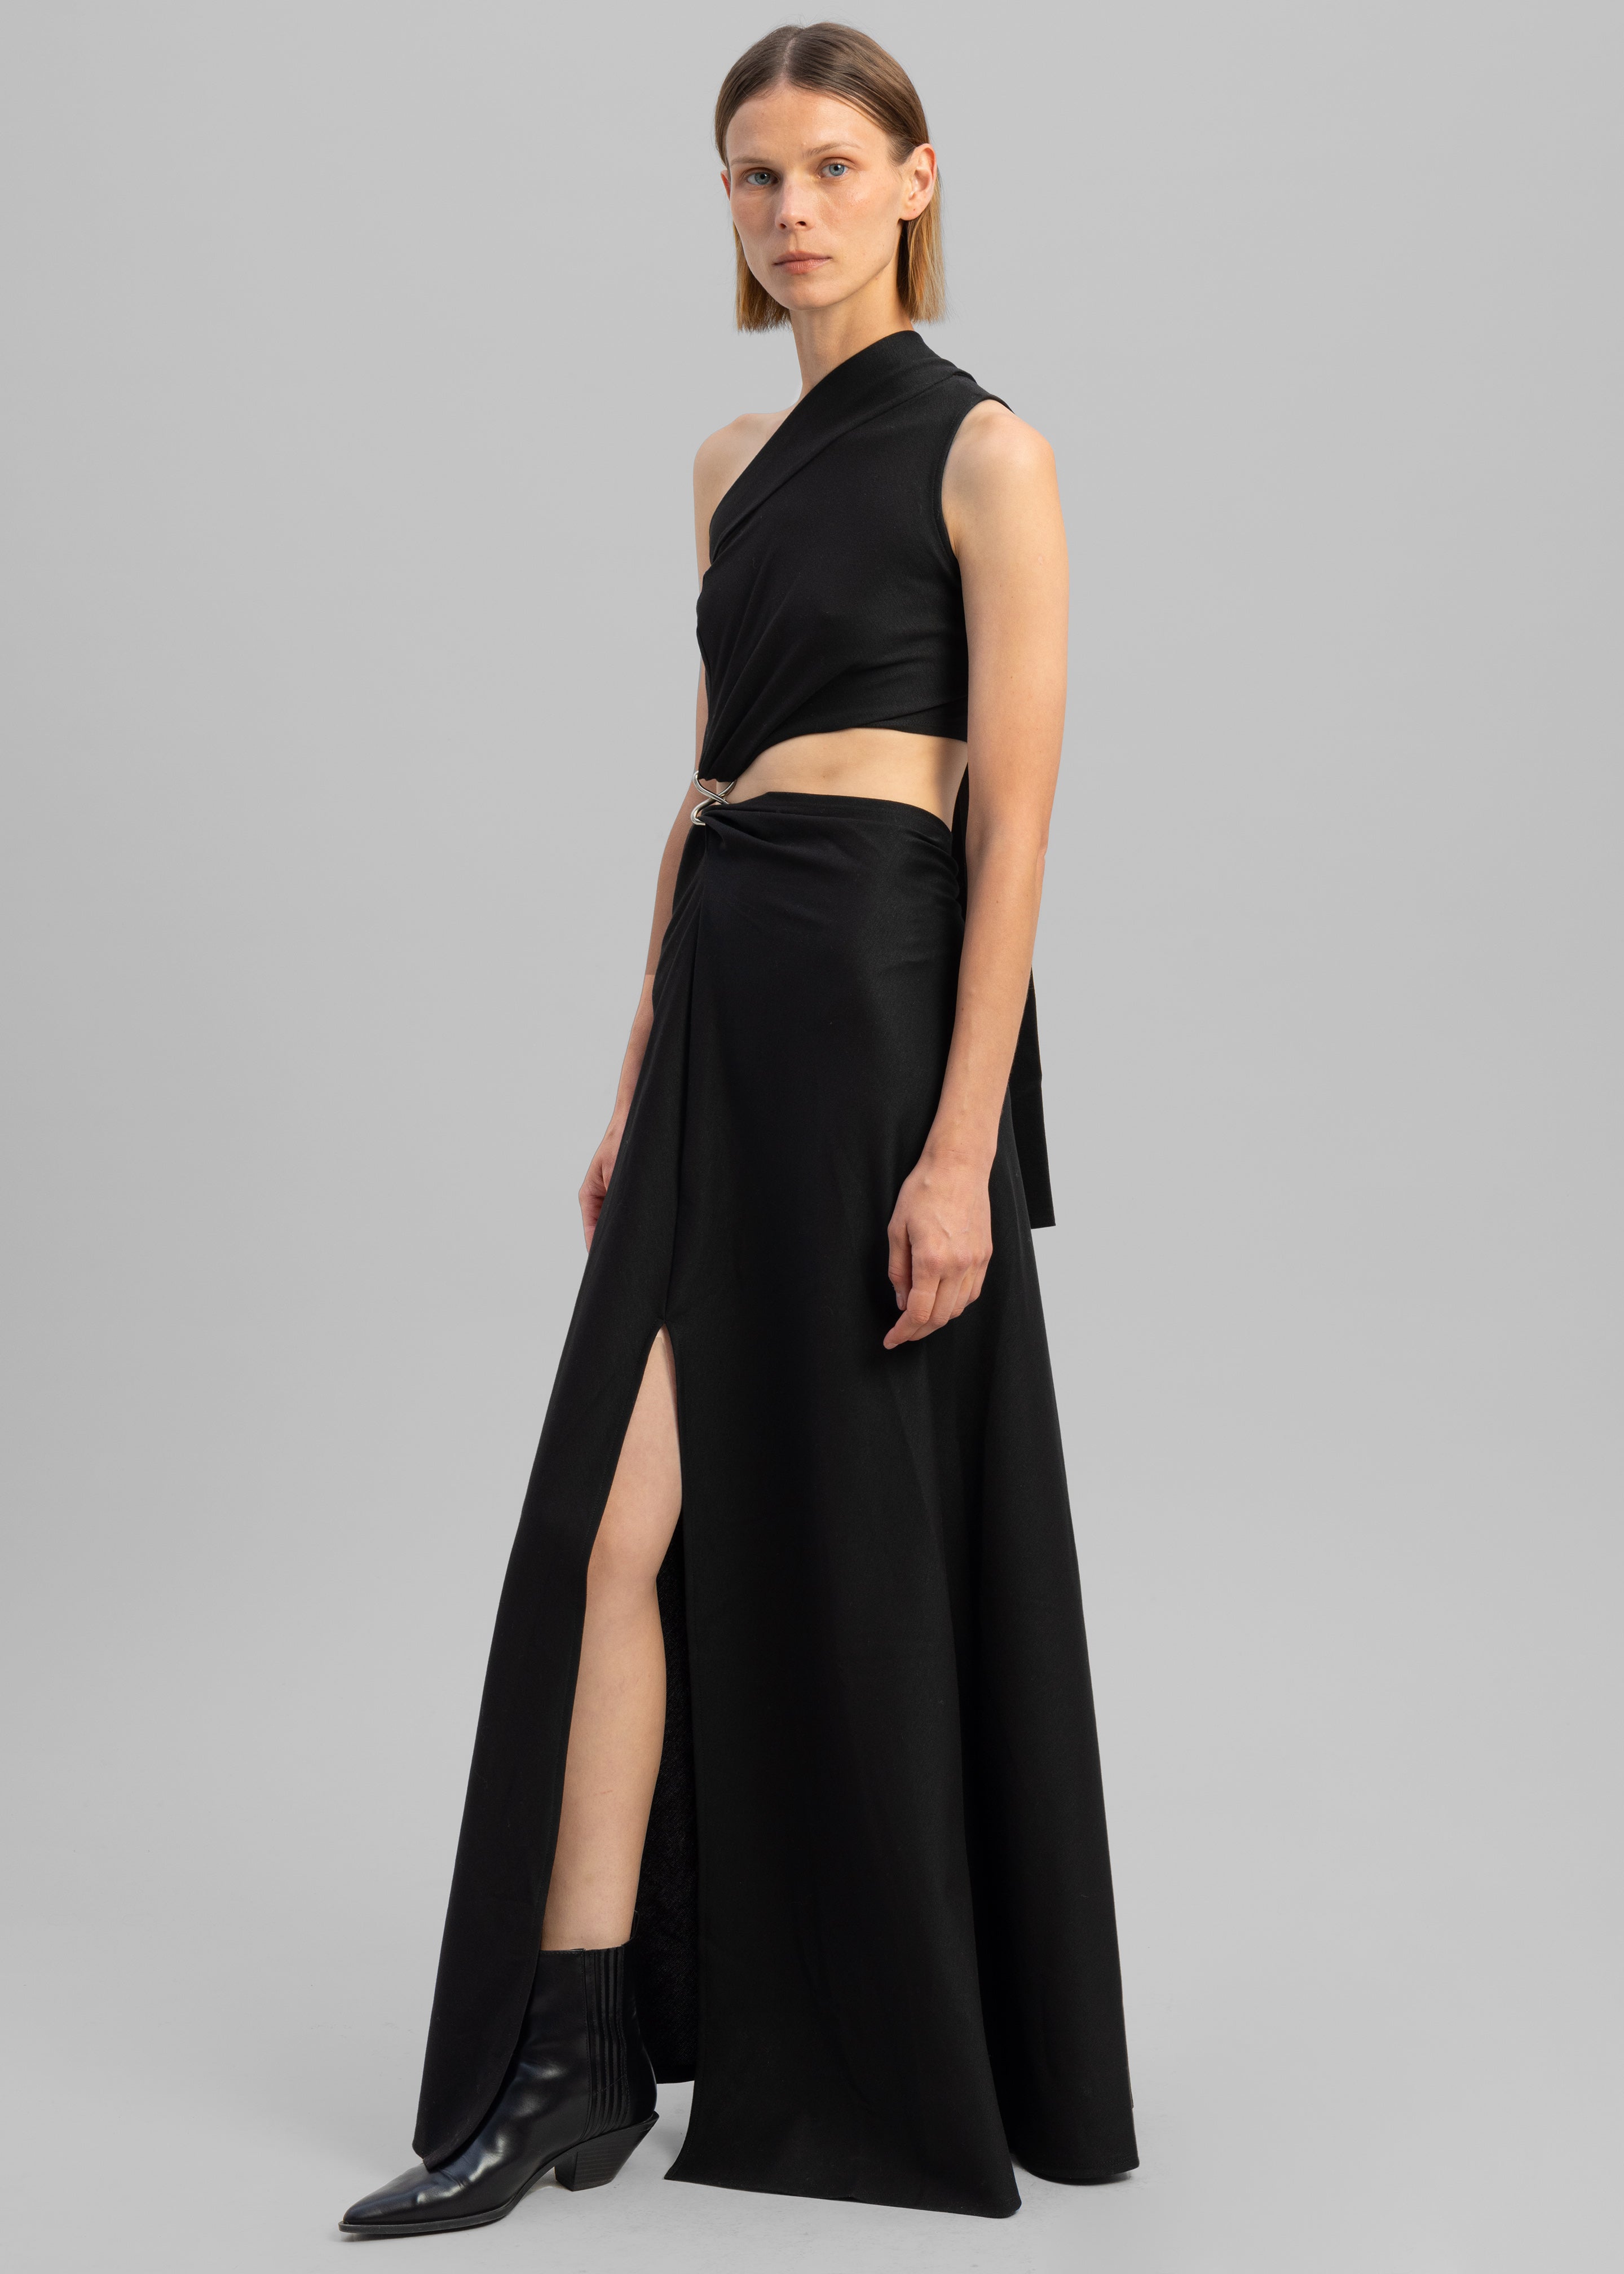 Sid Neigum Knit One-Shoulder Strap Dress W Hardware Detail - Black - 4